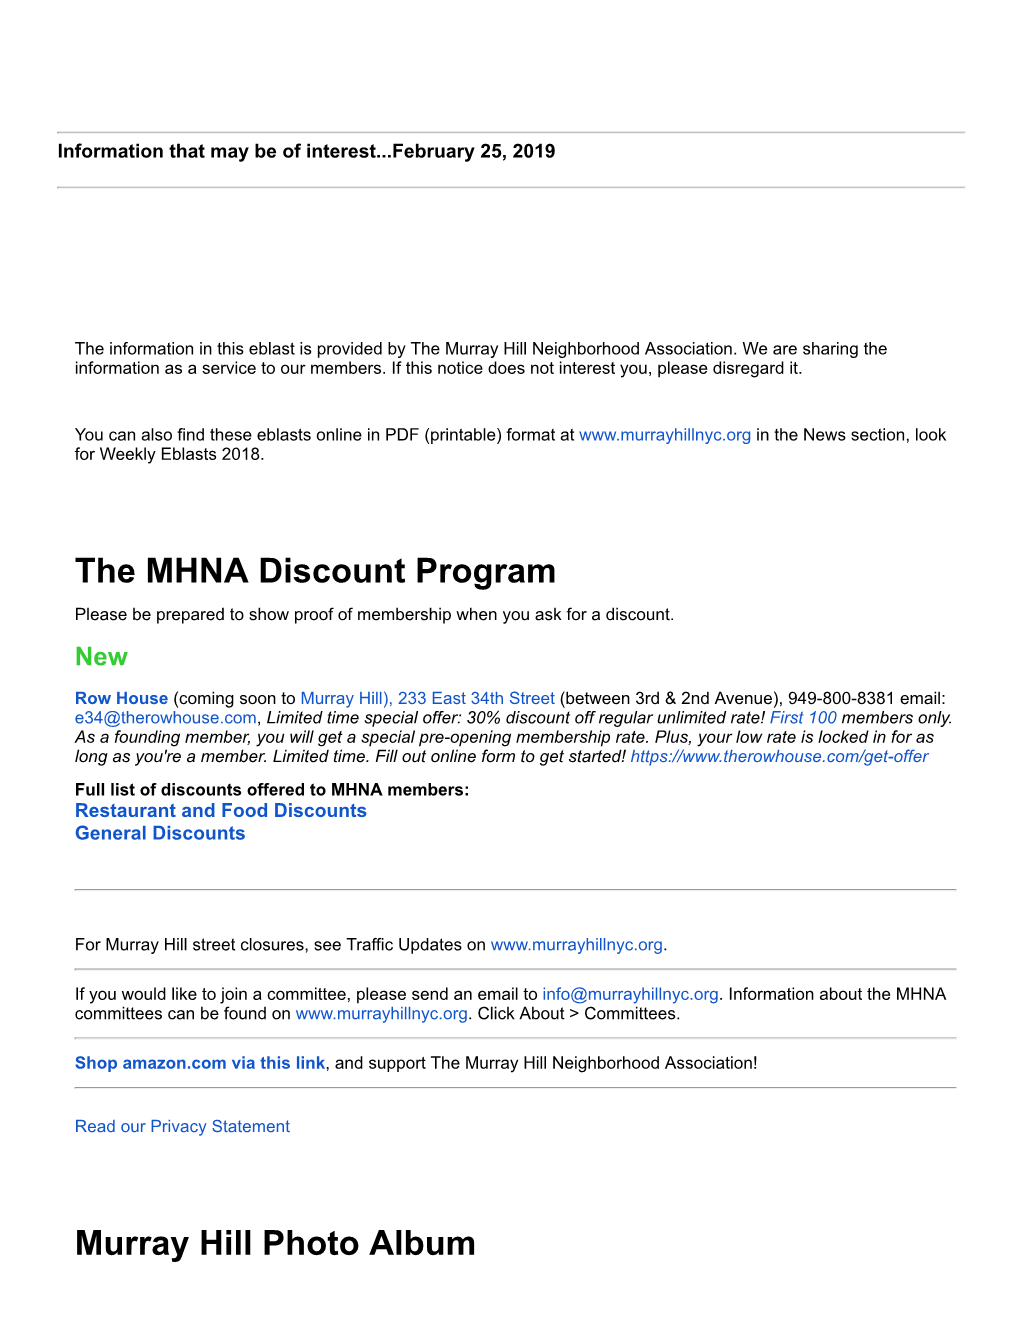 The MHNA Discount Program Murray Hill Photo Album